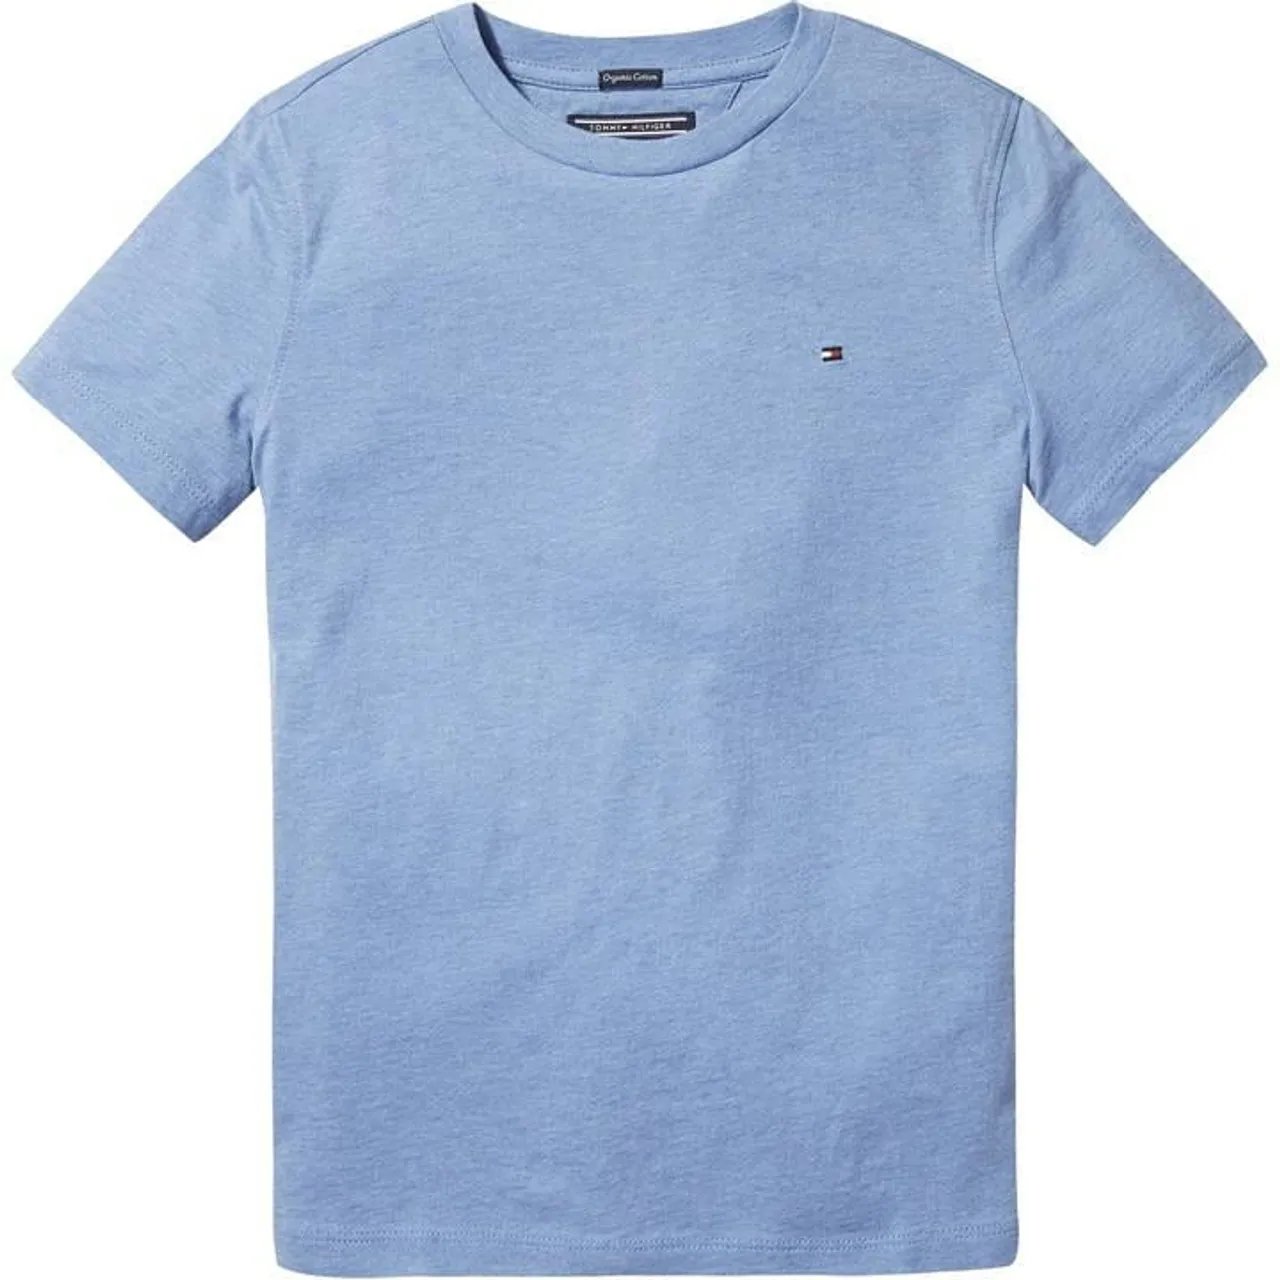 Tommy Hilfiger Children's Original T Shirt - Blue